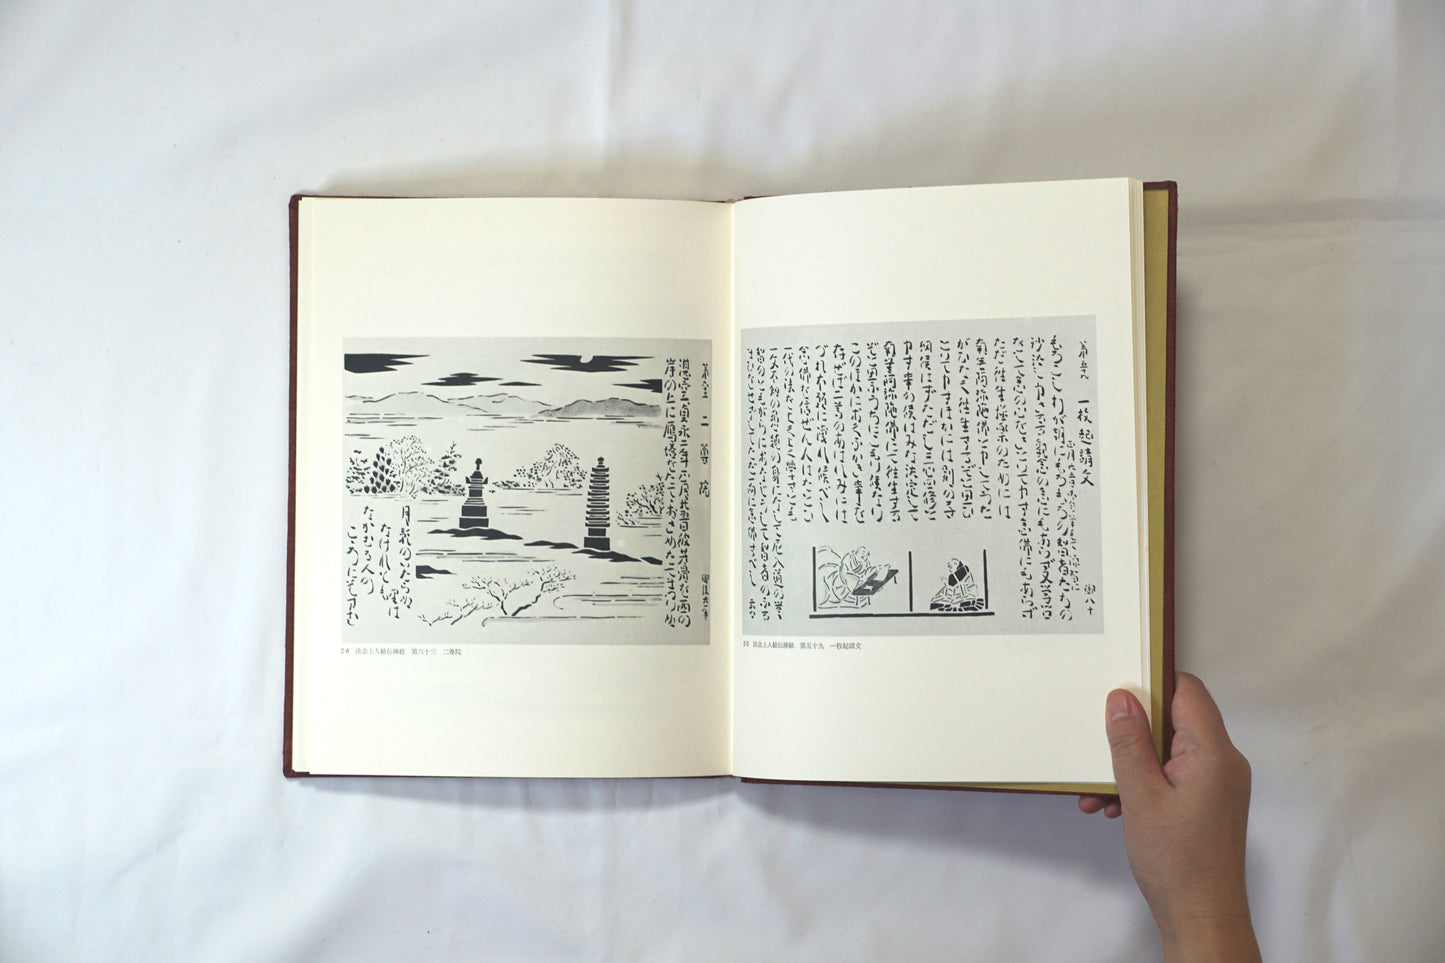 Self-selected collection of Keisuke Serizawa works, top and bottom set